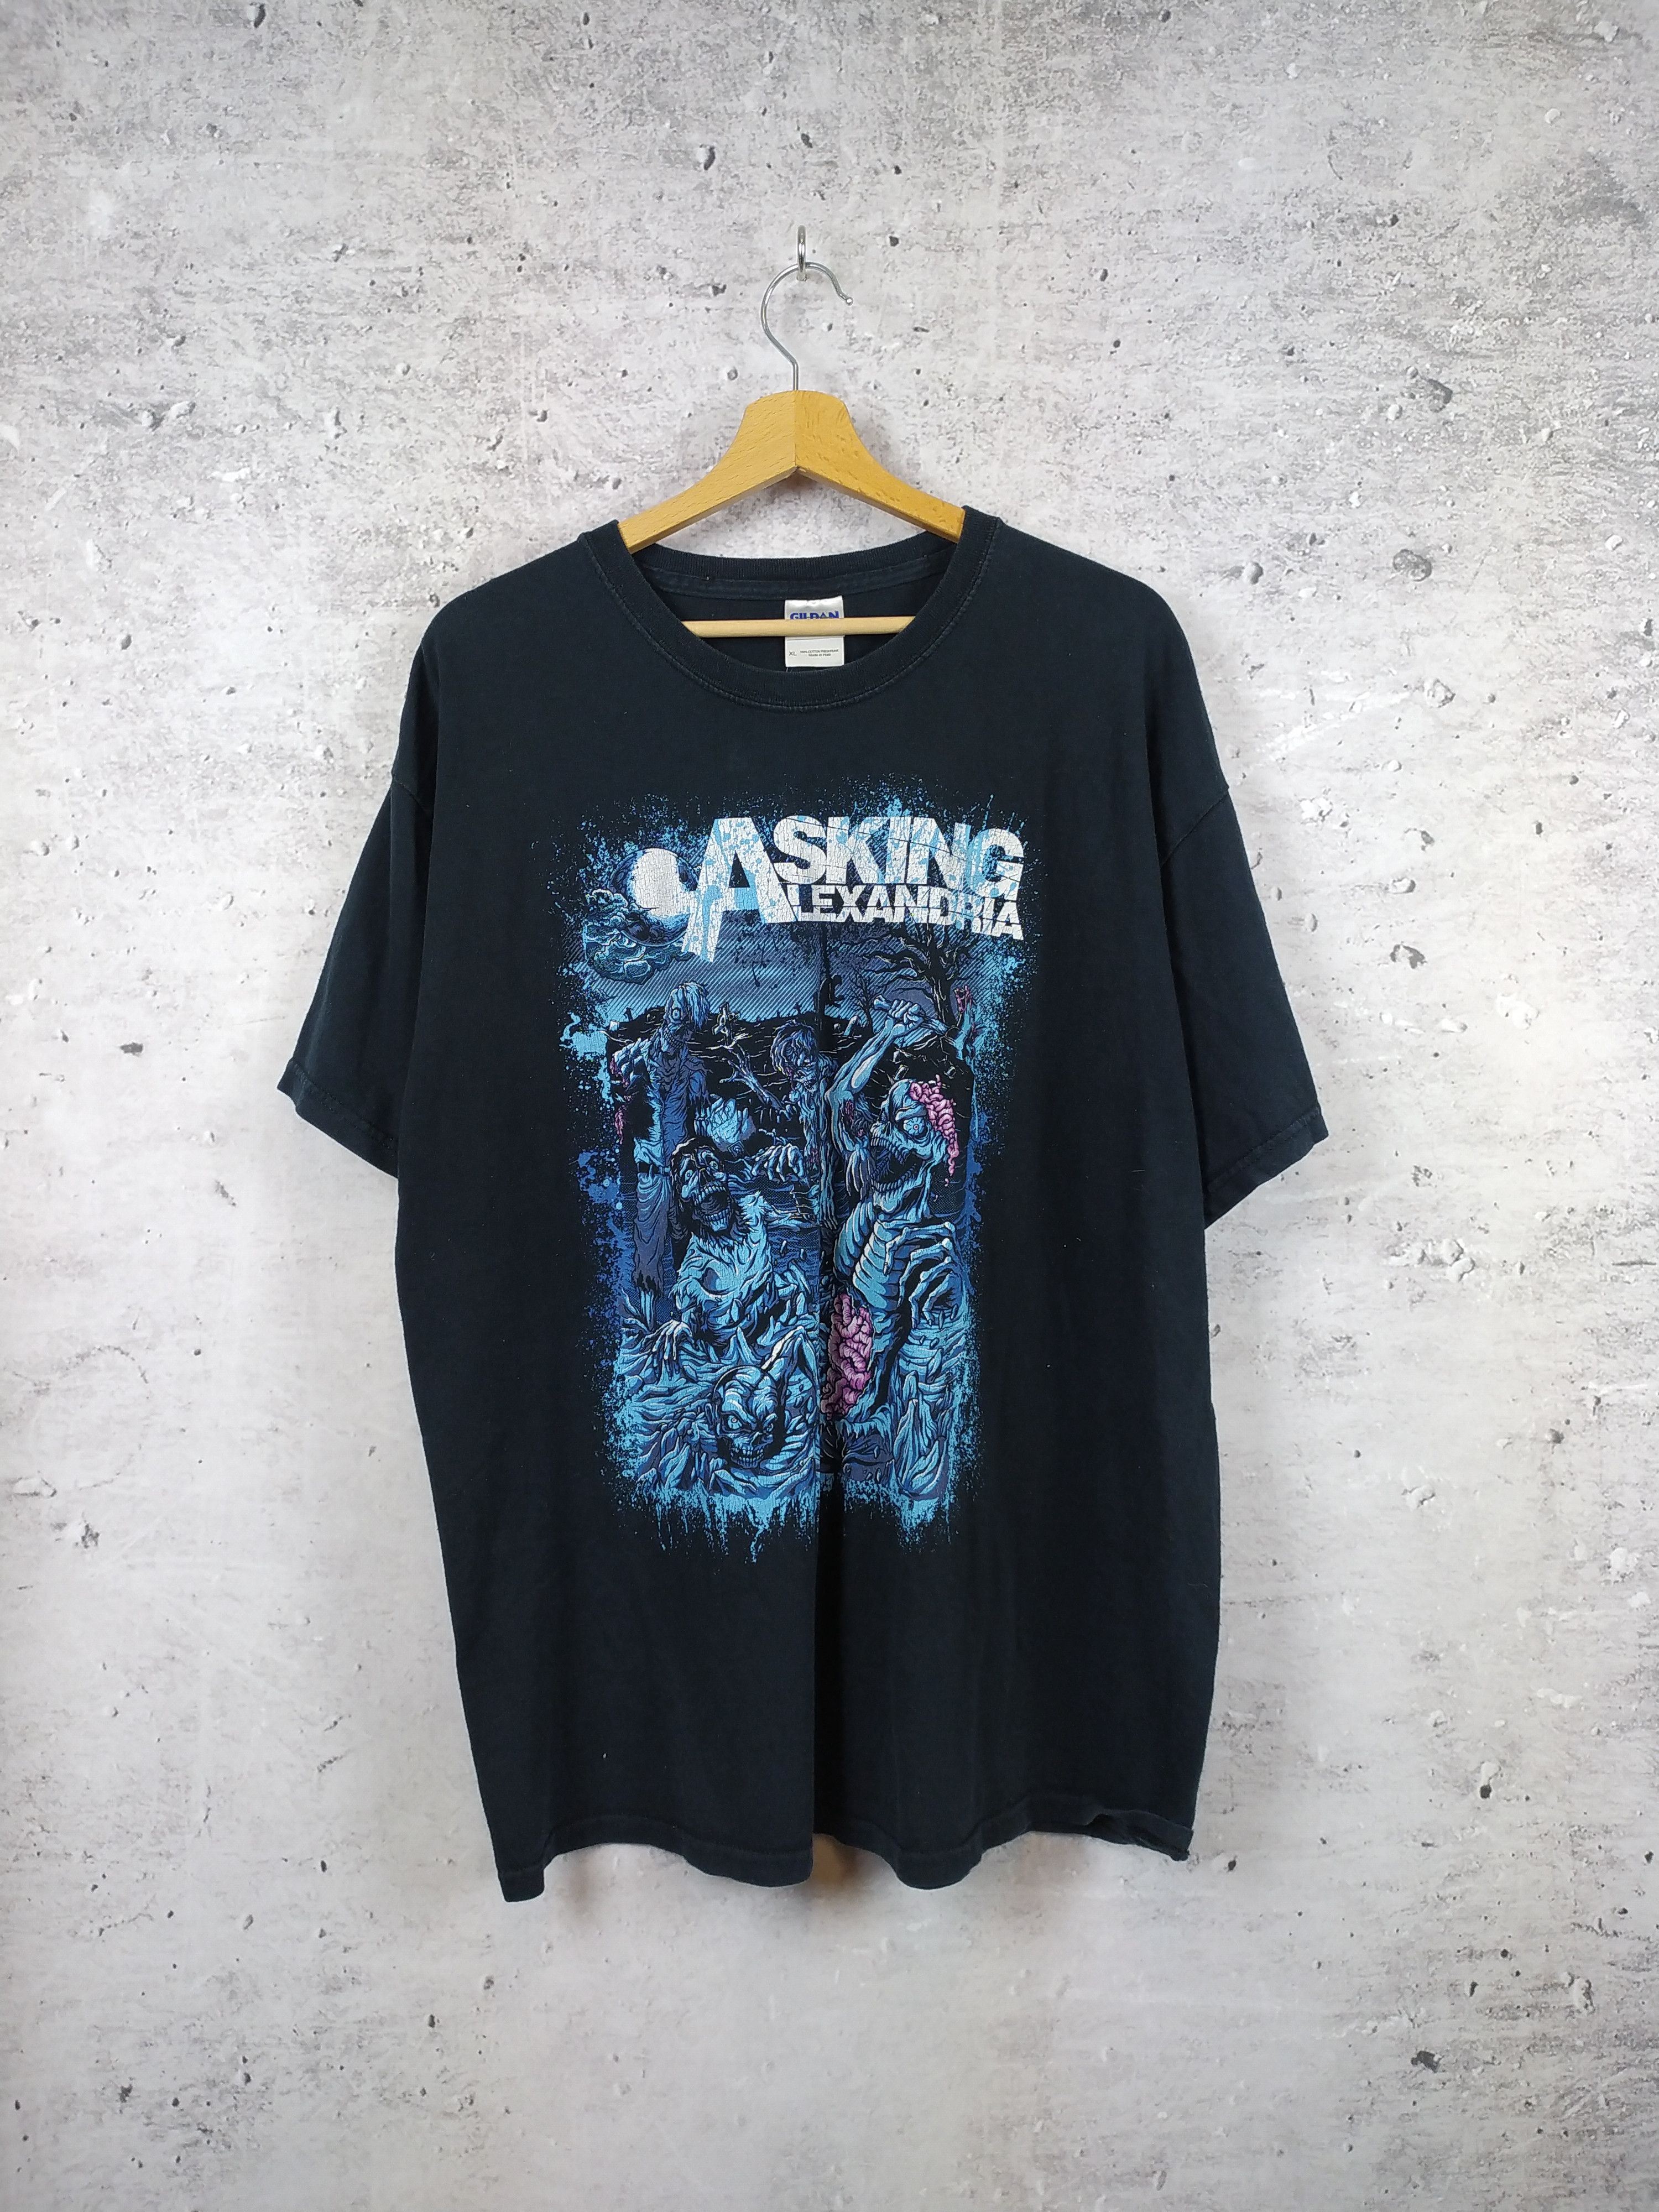 Vintage Asking Alexandria metal band t-shirt (B-041) | Grailed